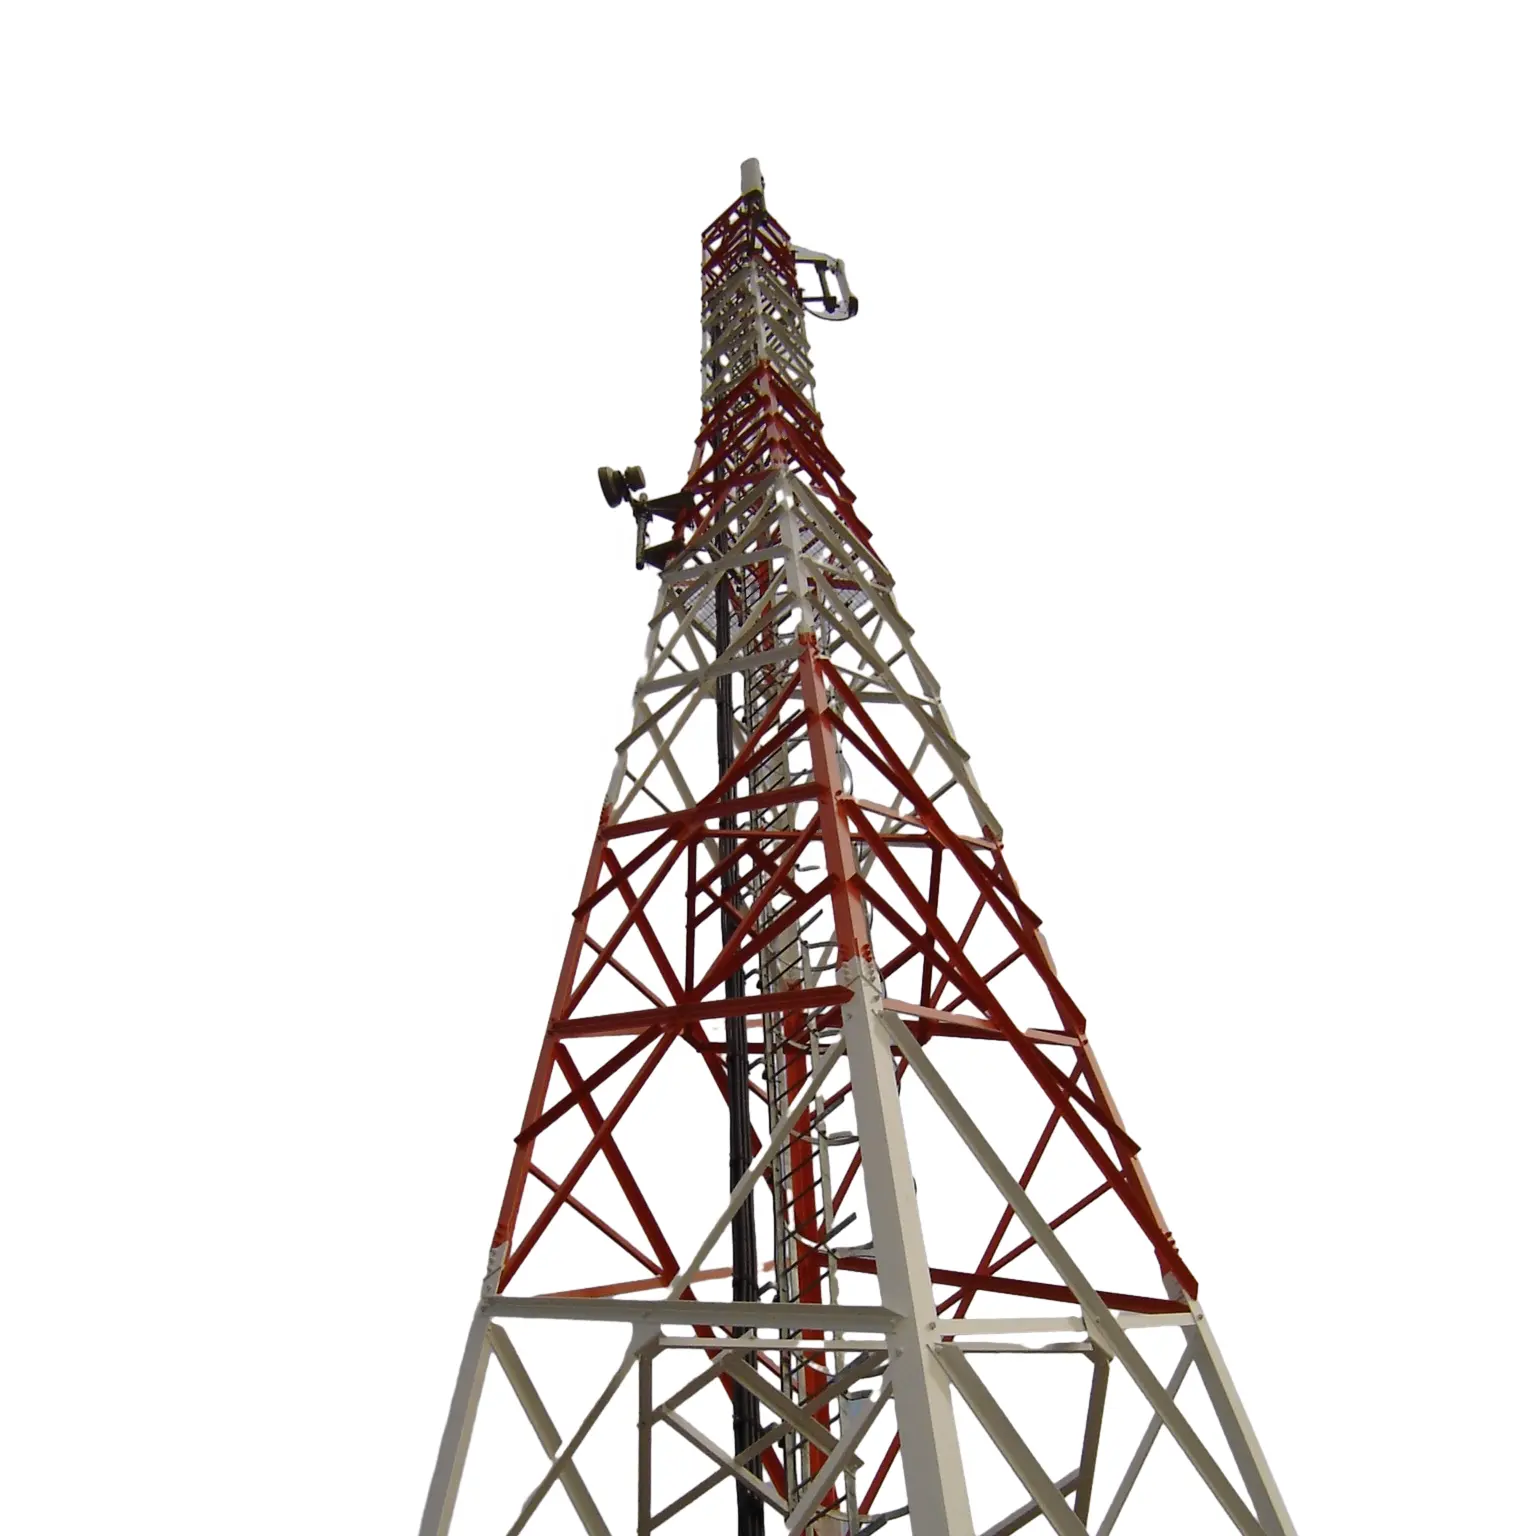 Menara Telekomunikasi dengan bahan petir dan Anting, lampu penerbangan, sistem penahan jatuh menara baja berkaki 3 atau 4